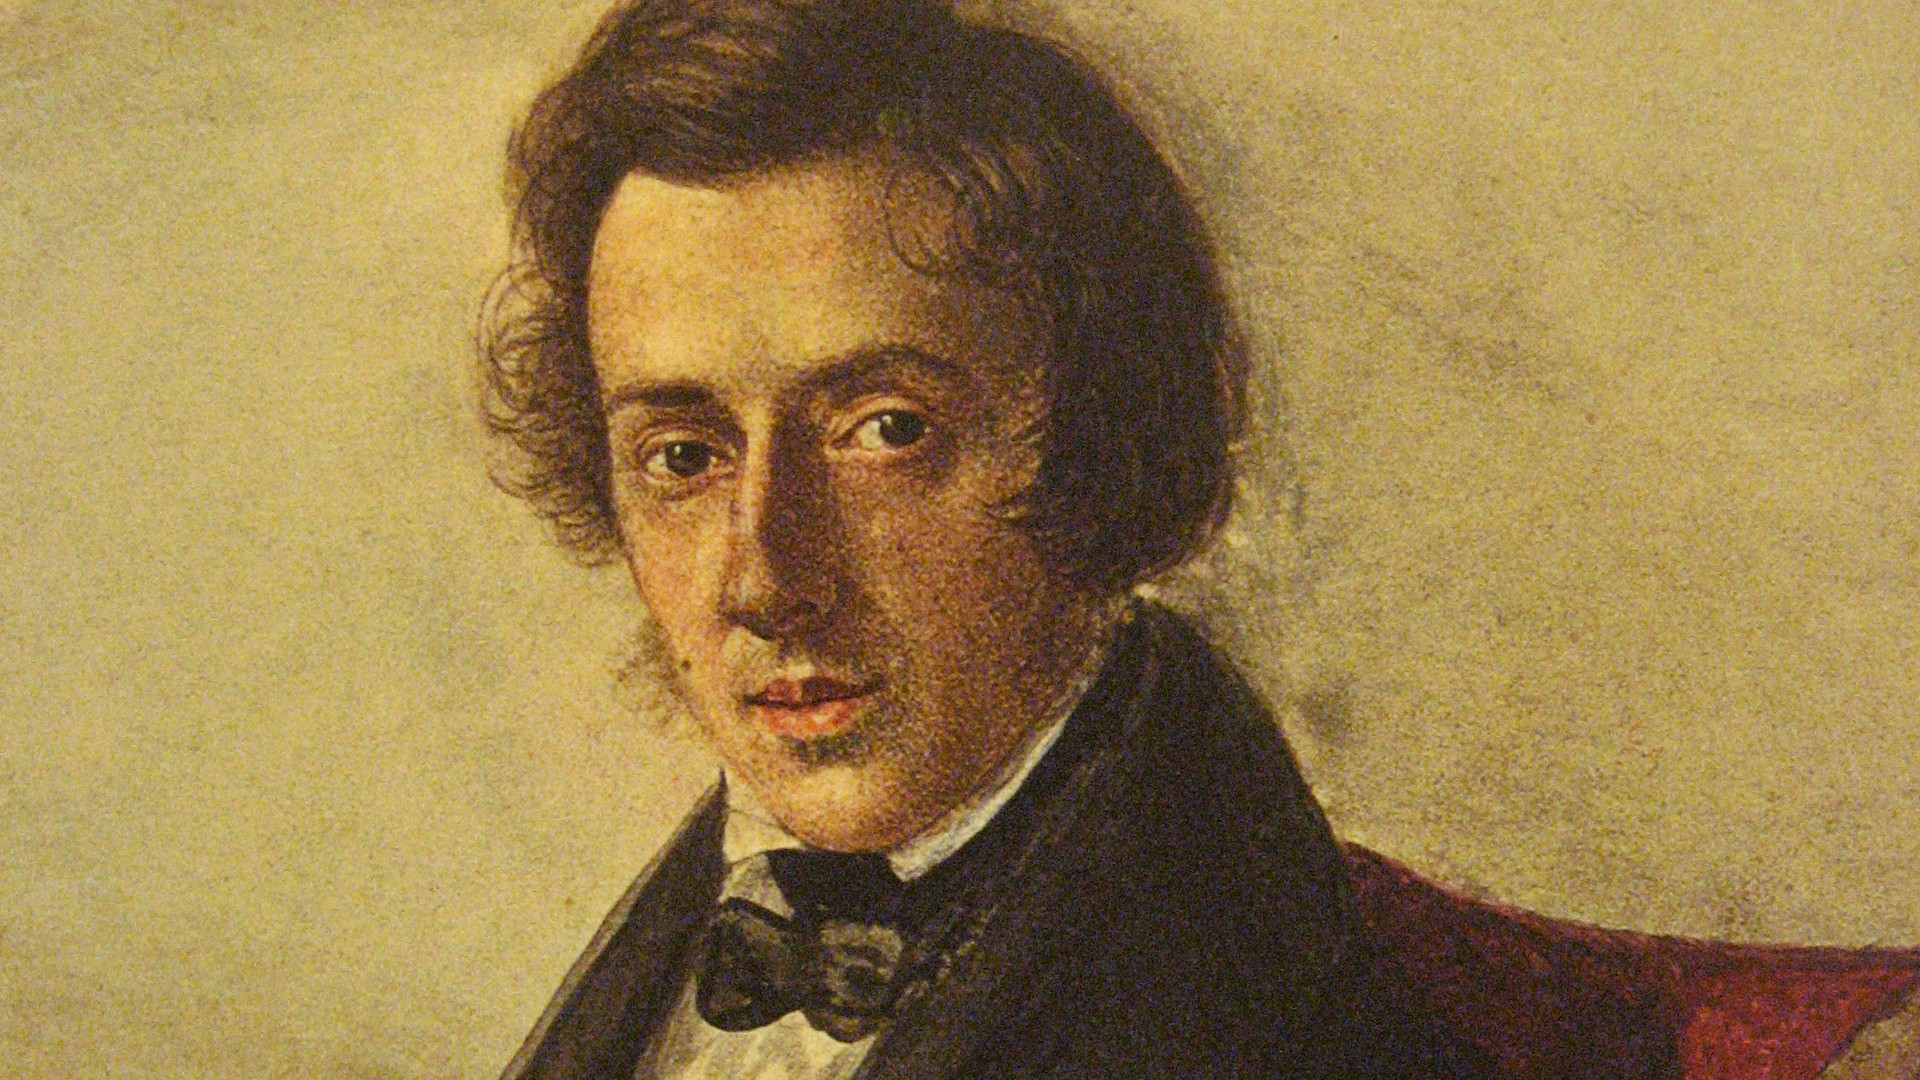 http://polonicult.com/wp-content/uploads/2014/11/Chopin-PoloniCult.jpg